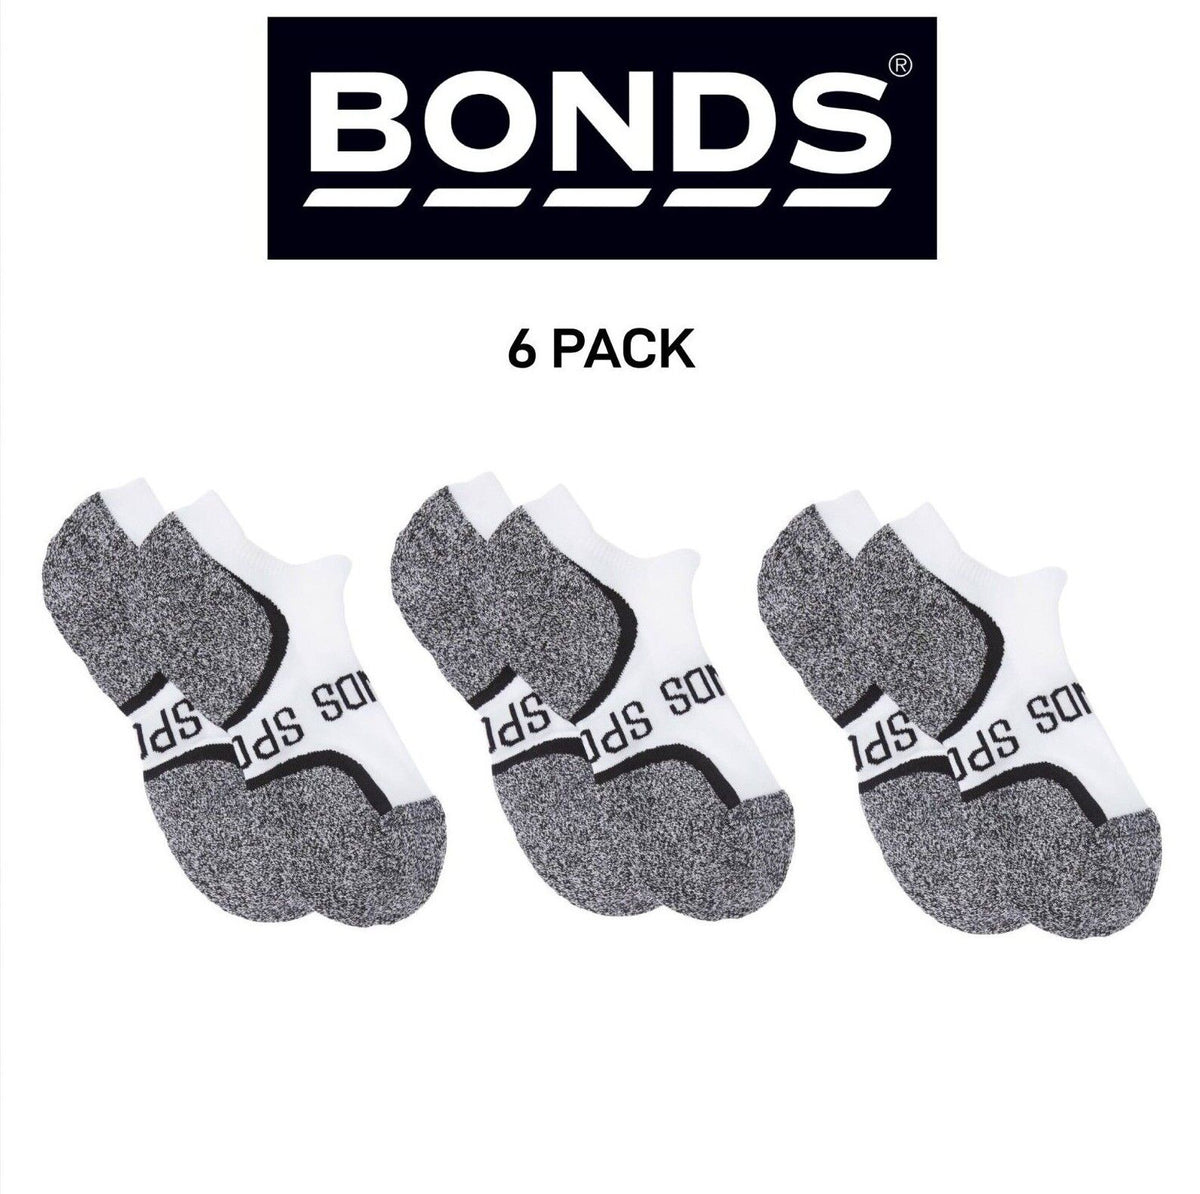 Bonds Womens Ultimate Comfort Low Cut Extra Heel & Toe Cushioning 6 Pack LXWA2N